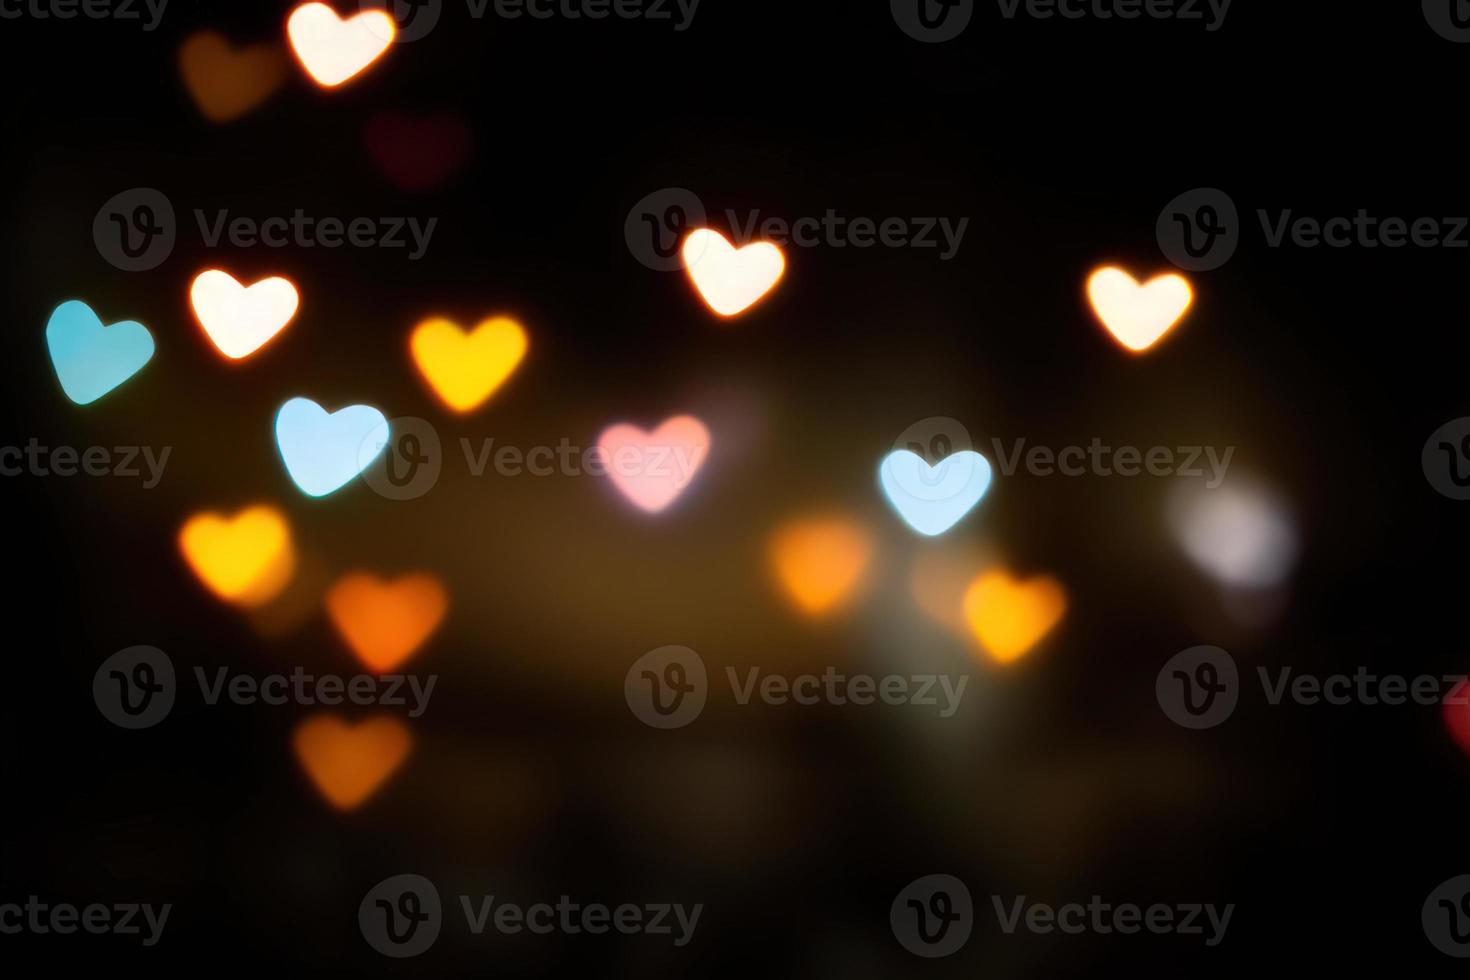 heart shape bokeh lights background photo